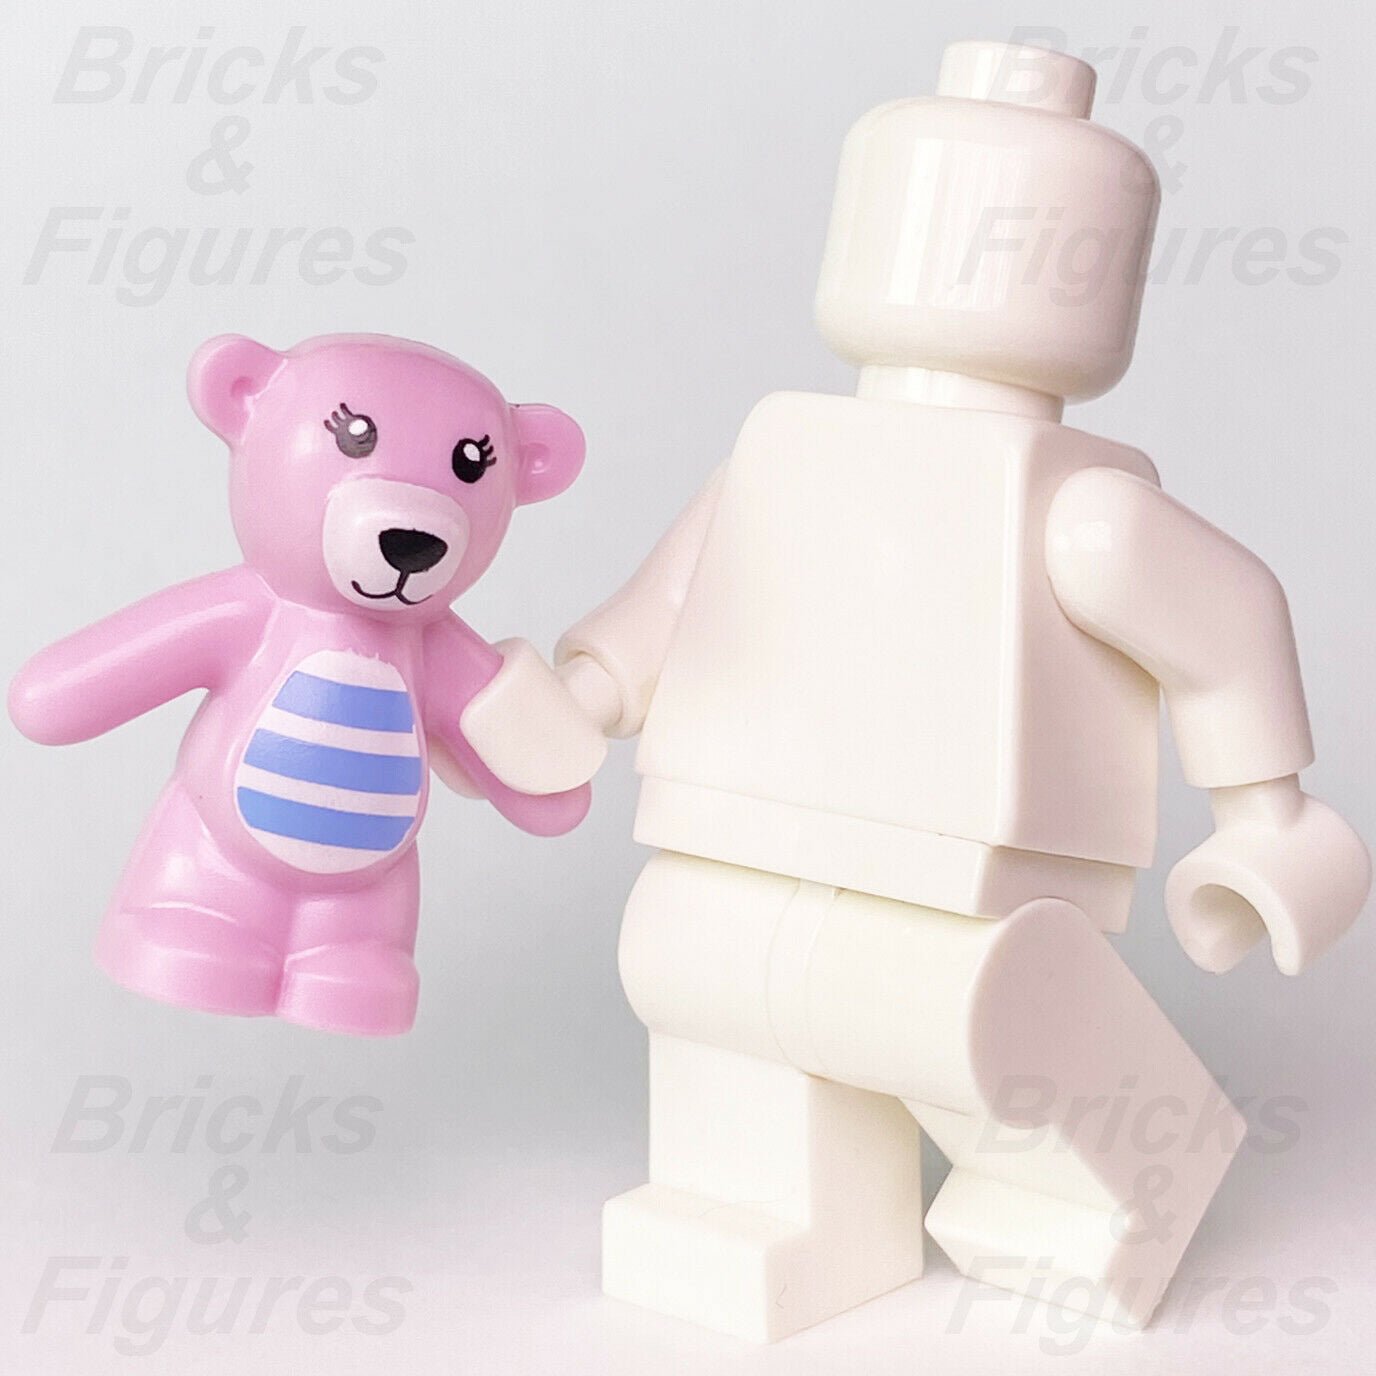 Collectible Minifigures LEGO Pink Teddy Bear Ninjago Movie Accessory Part 71019 - Bricks & Figures